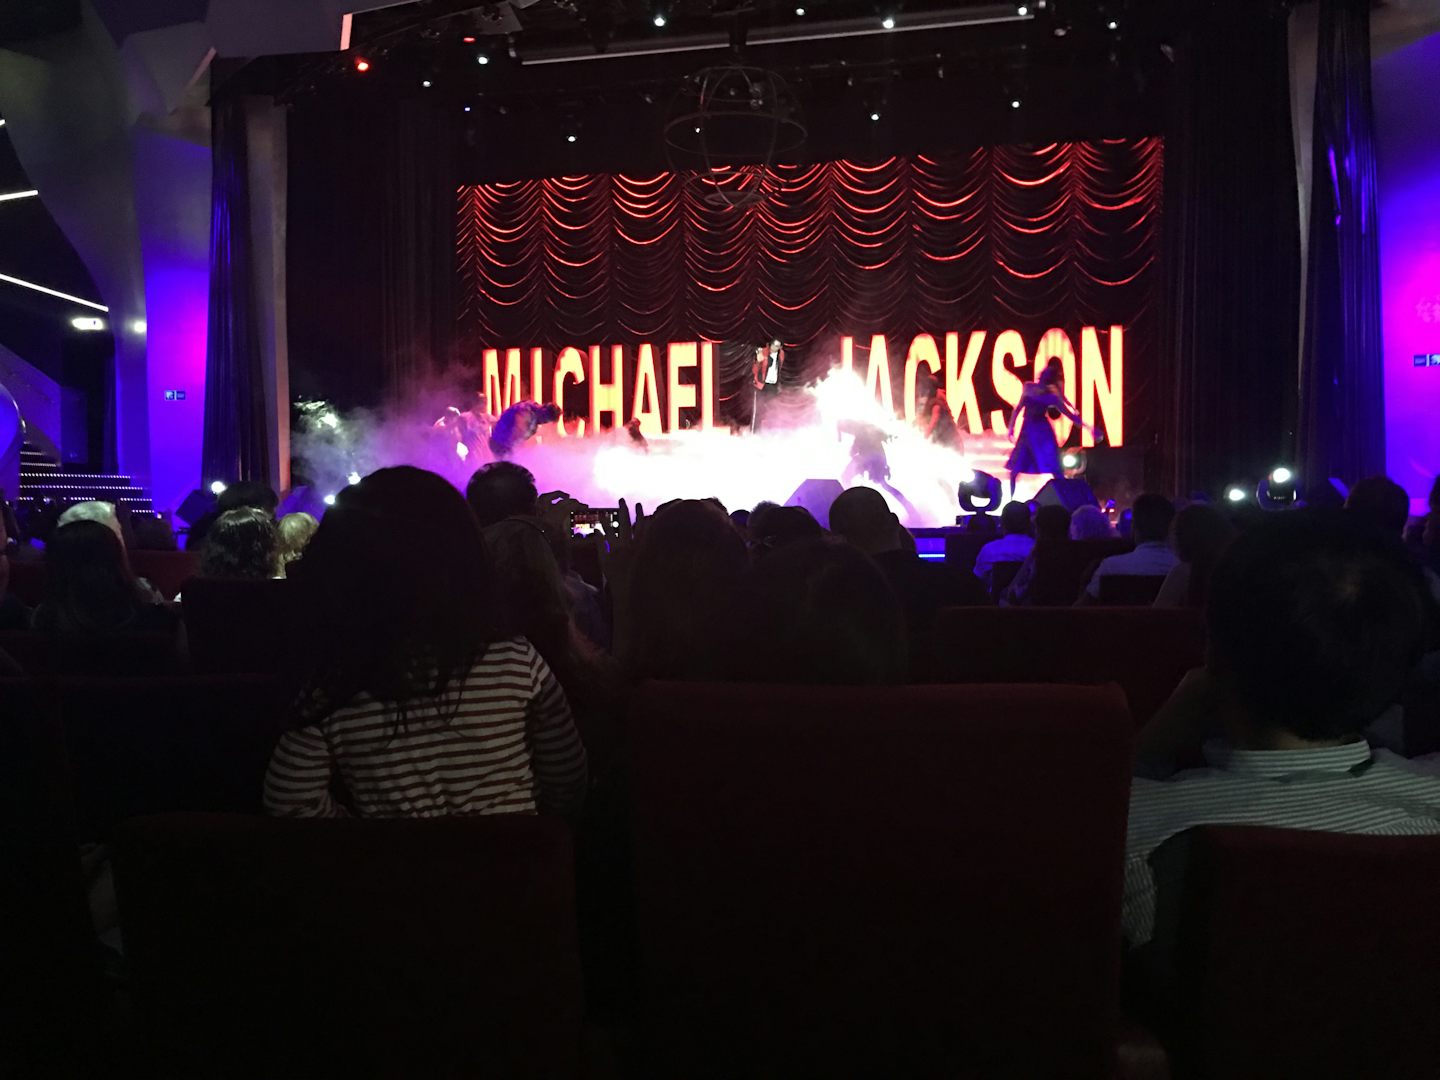 The Michael Jackson show was phenomenal!